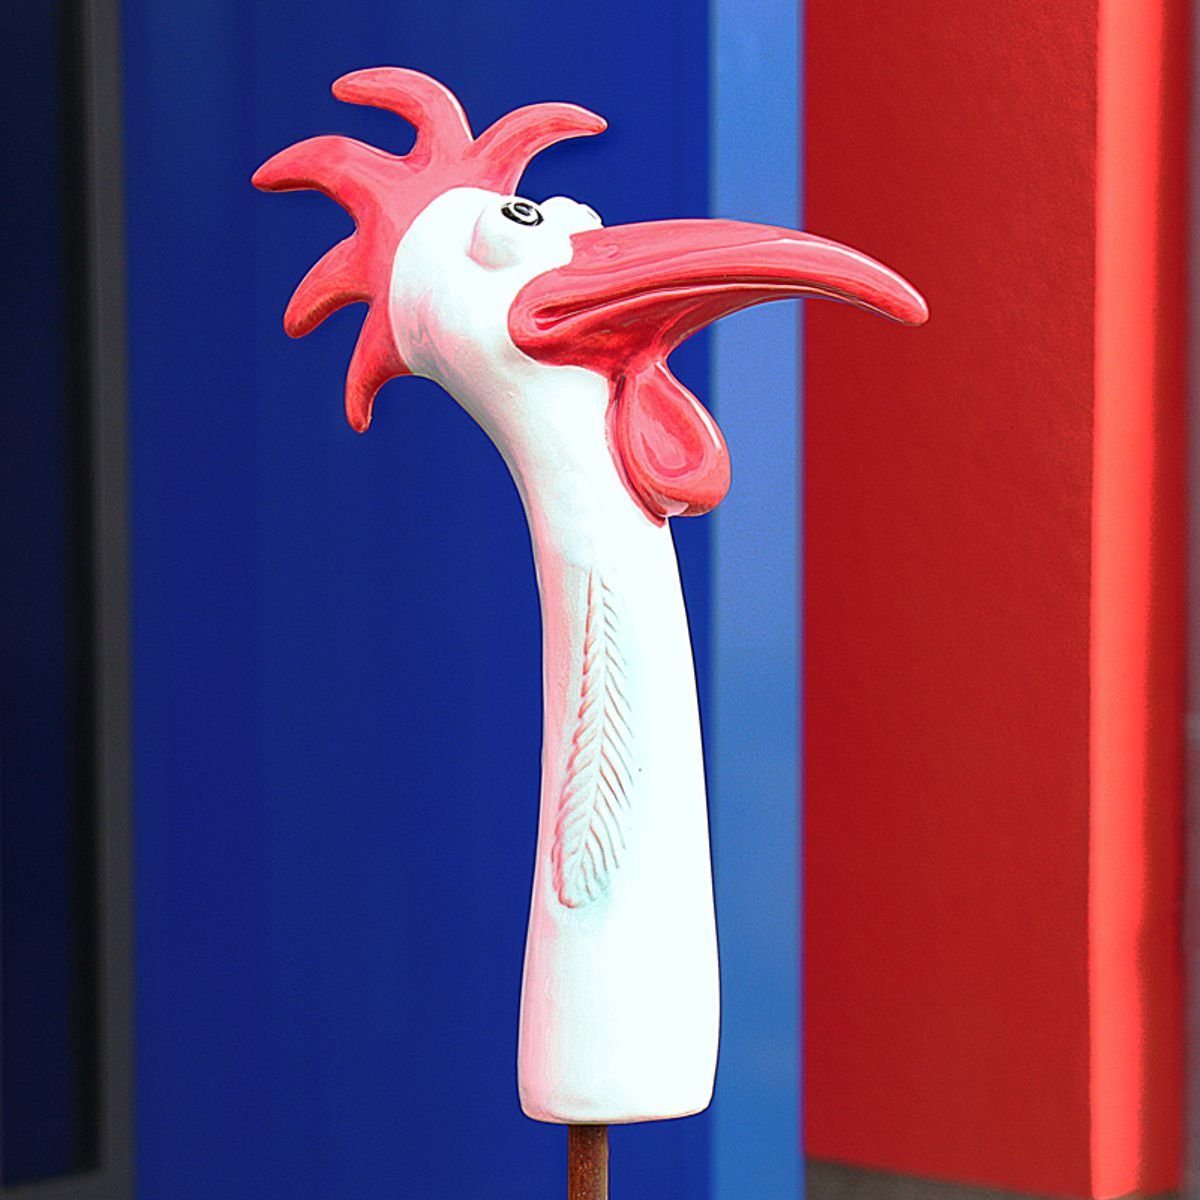 Hahn-Hals Keramik-Vogel (Stück) Gartenfigur rotem Tangoo mit Schnabel, weiß Tangoo